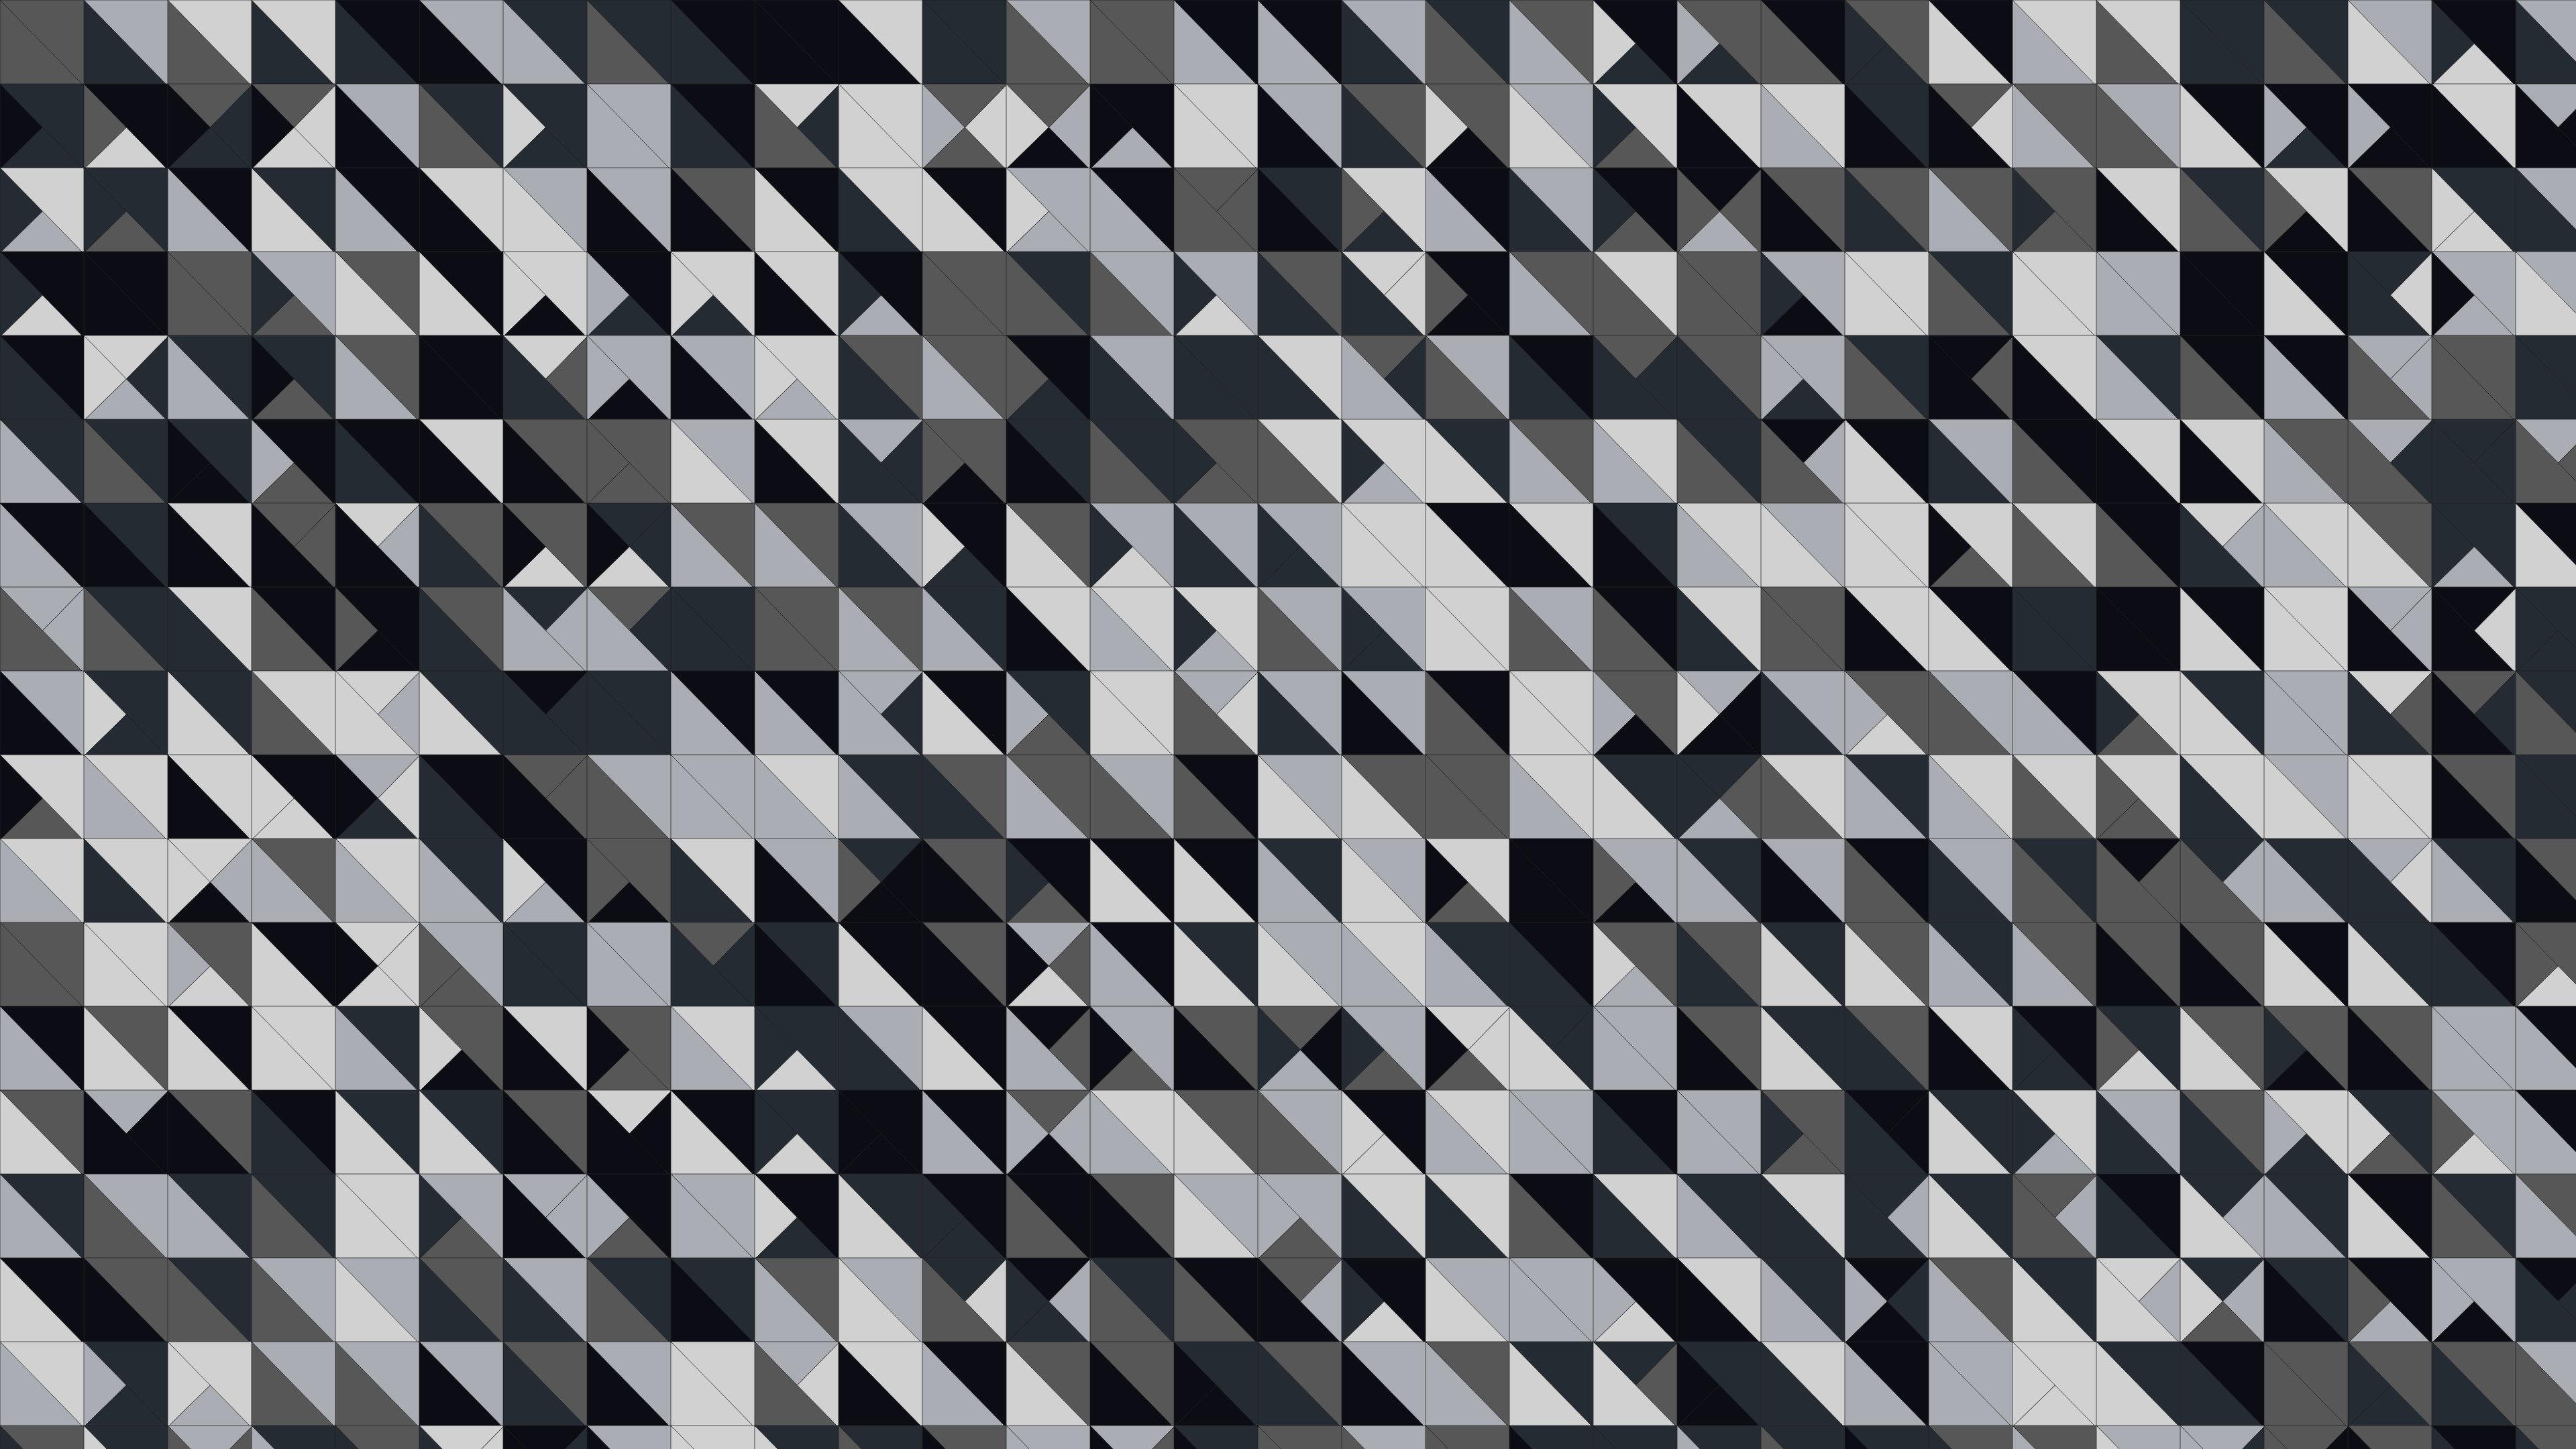 4K-resolution Black and White Logo - High resolution Black and White abstract HD 4k wallpaper